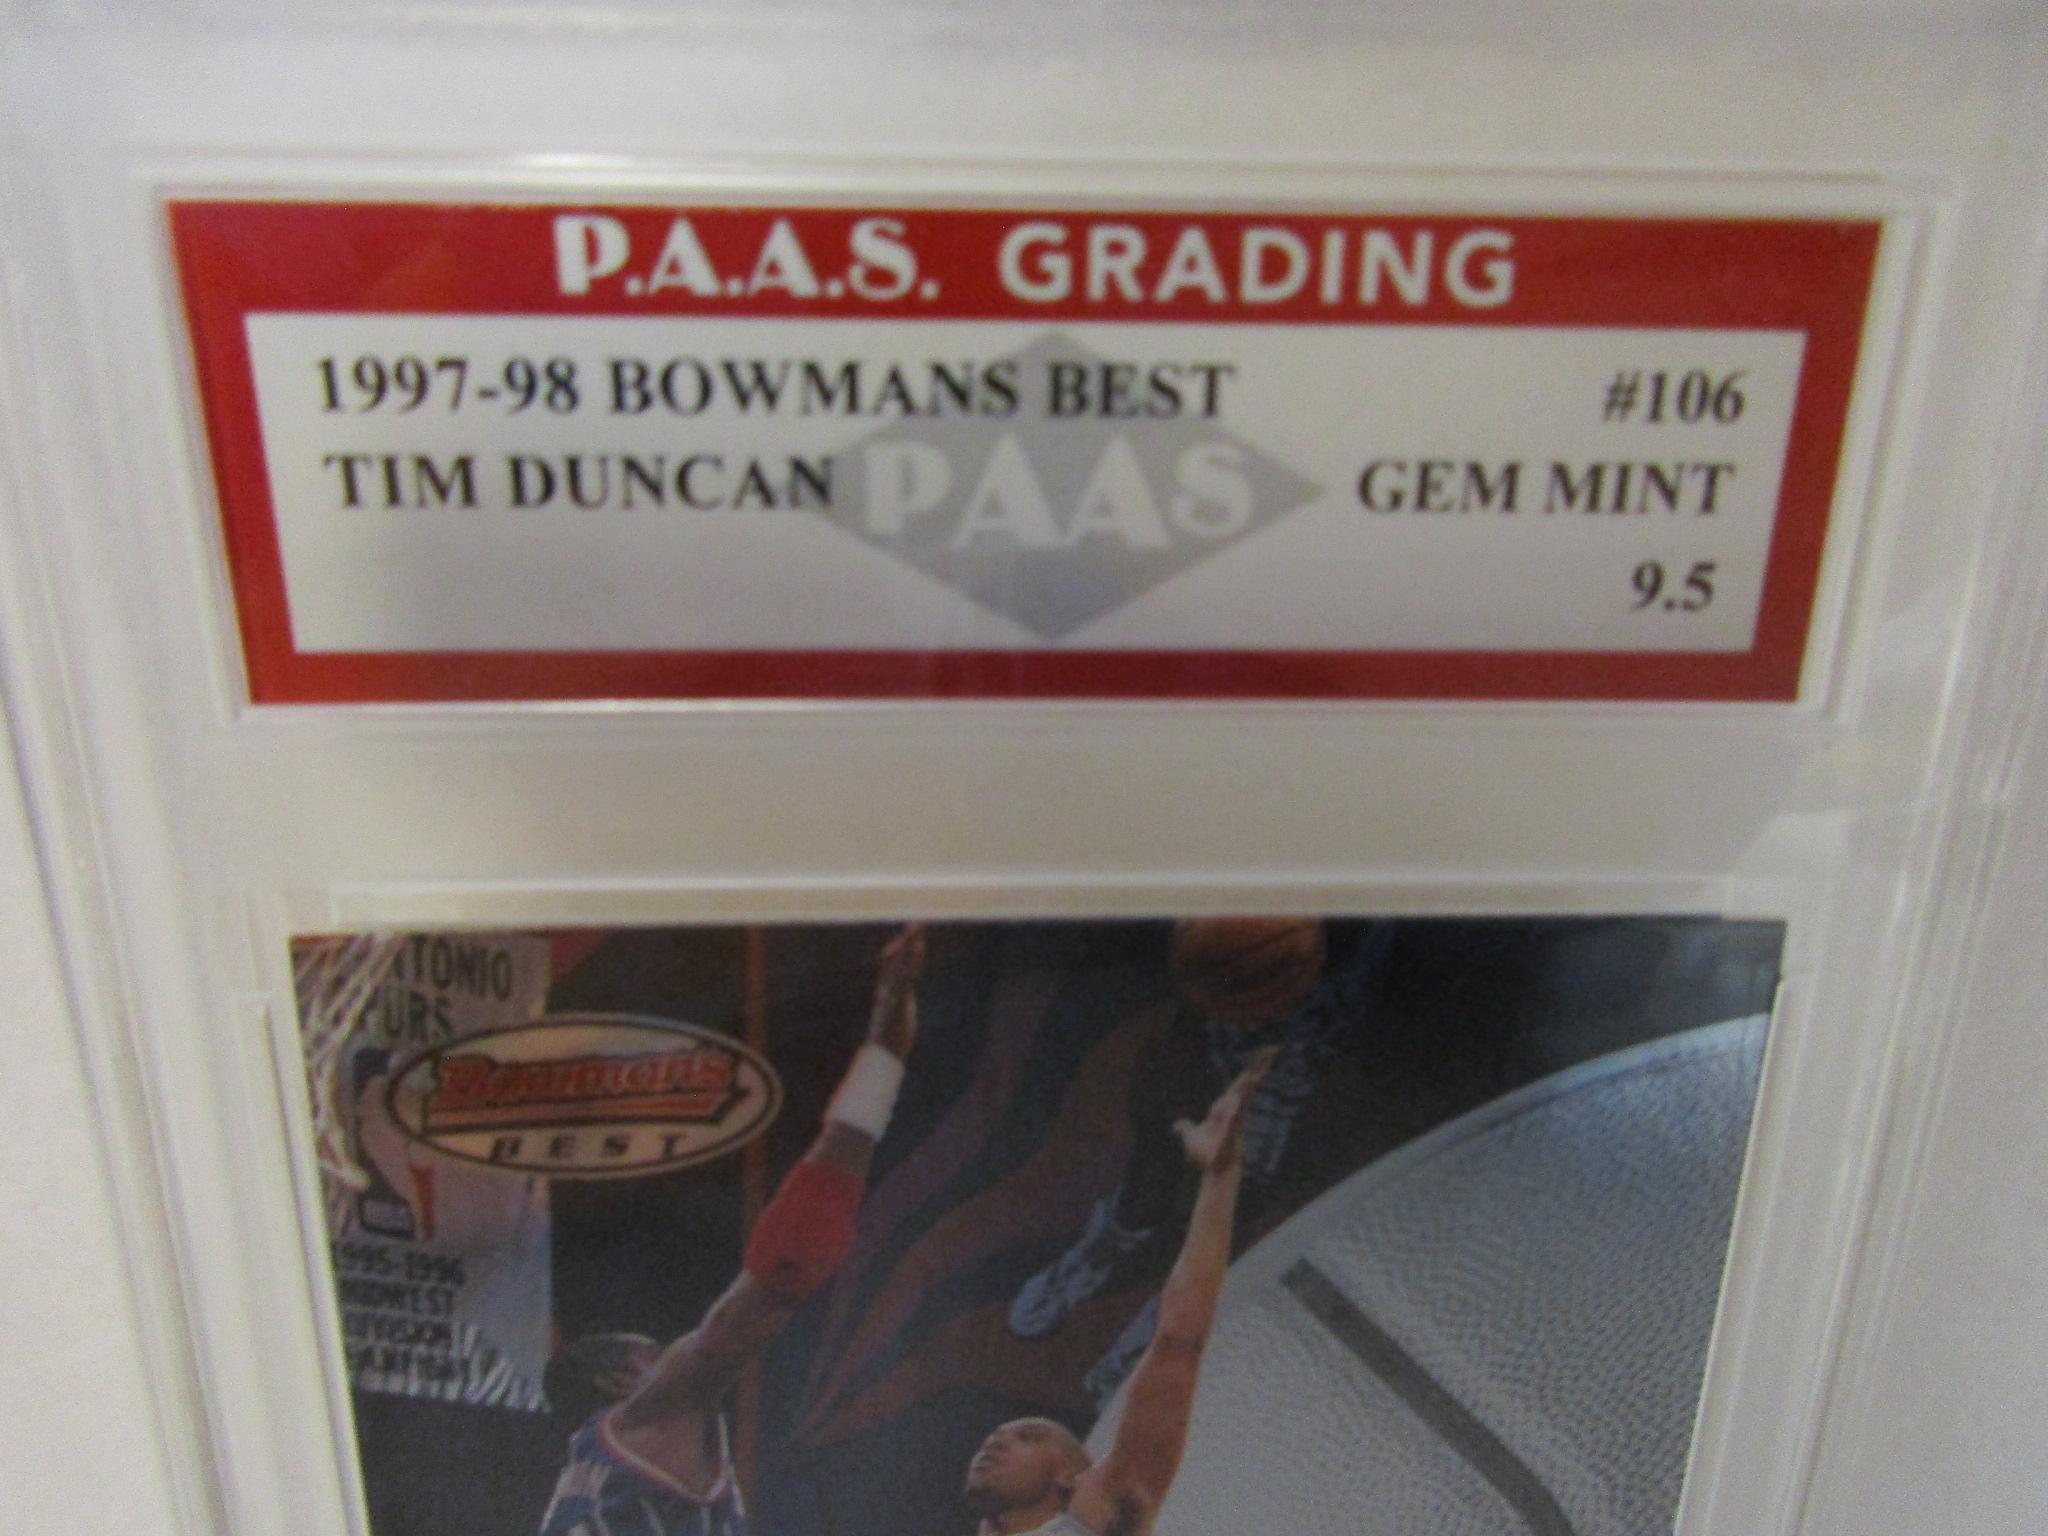 Tim Duncan Spurs 1997-98 Bowmans Best #106 graded PAAS Gem Mint 9.5